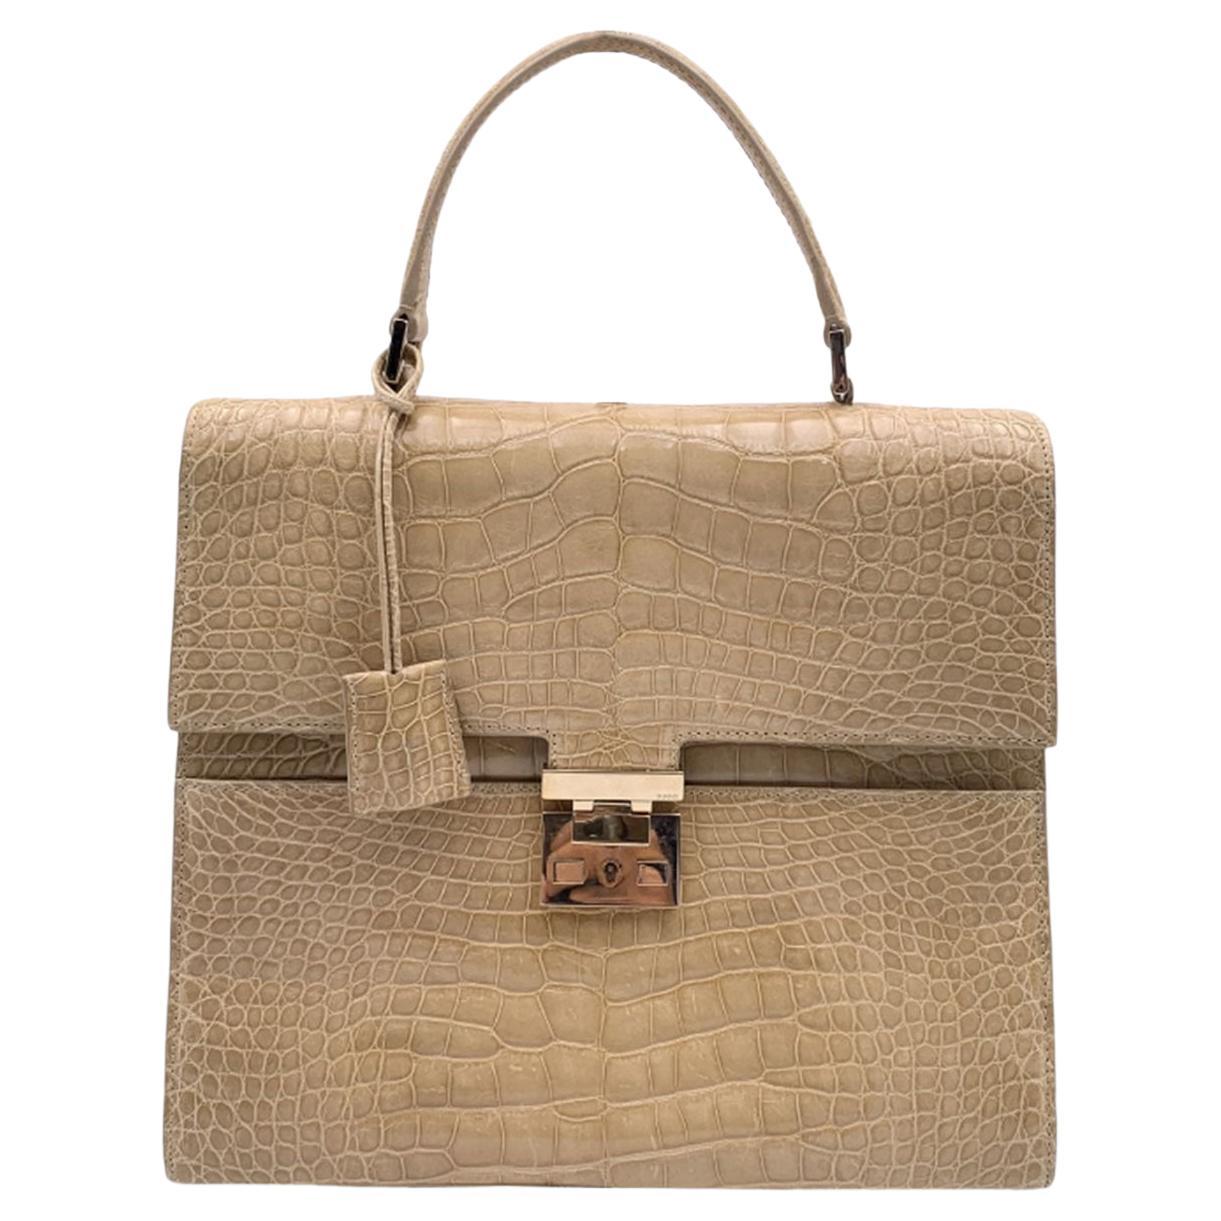 Gucci Beige Patent Leather Satchel Top Handle Bag